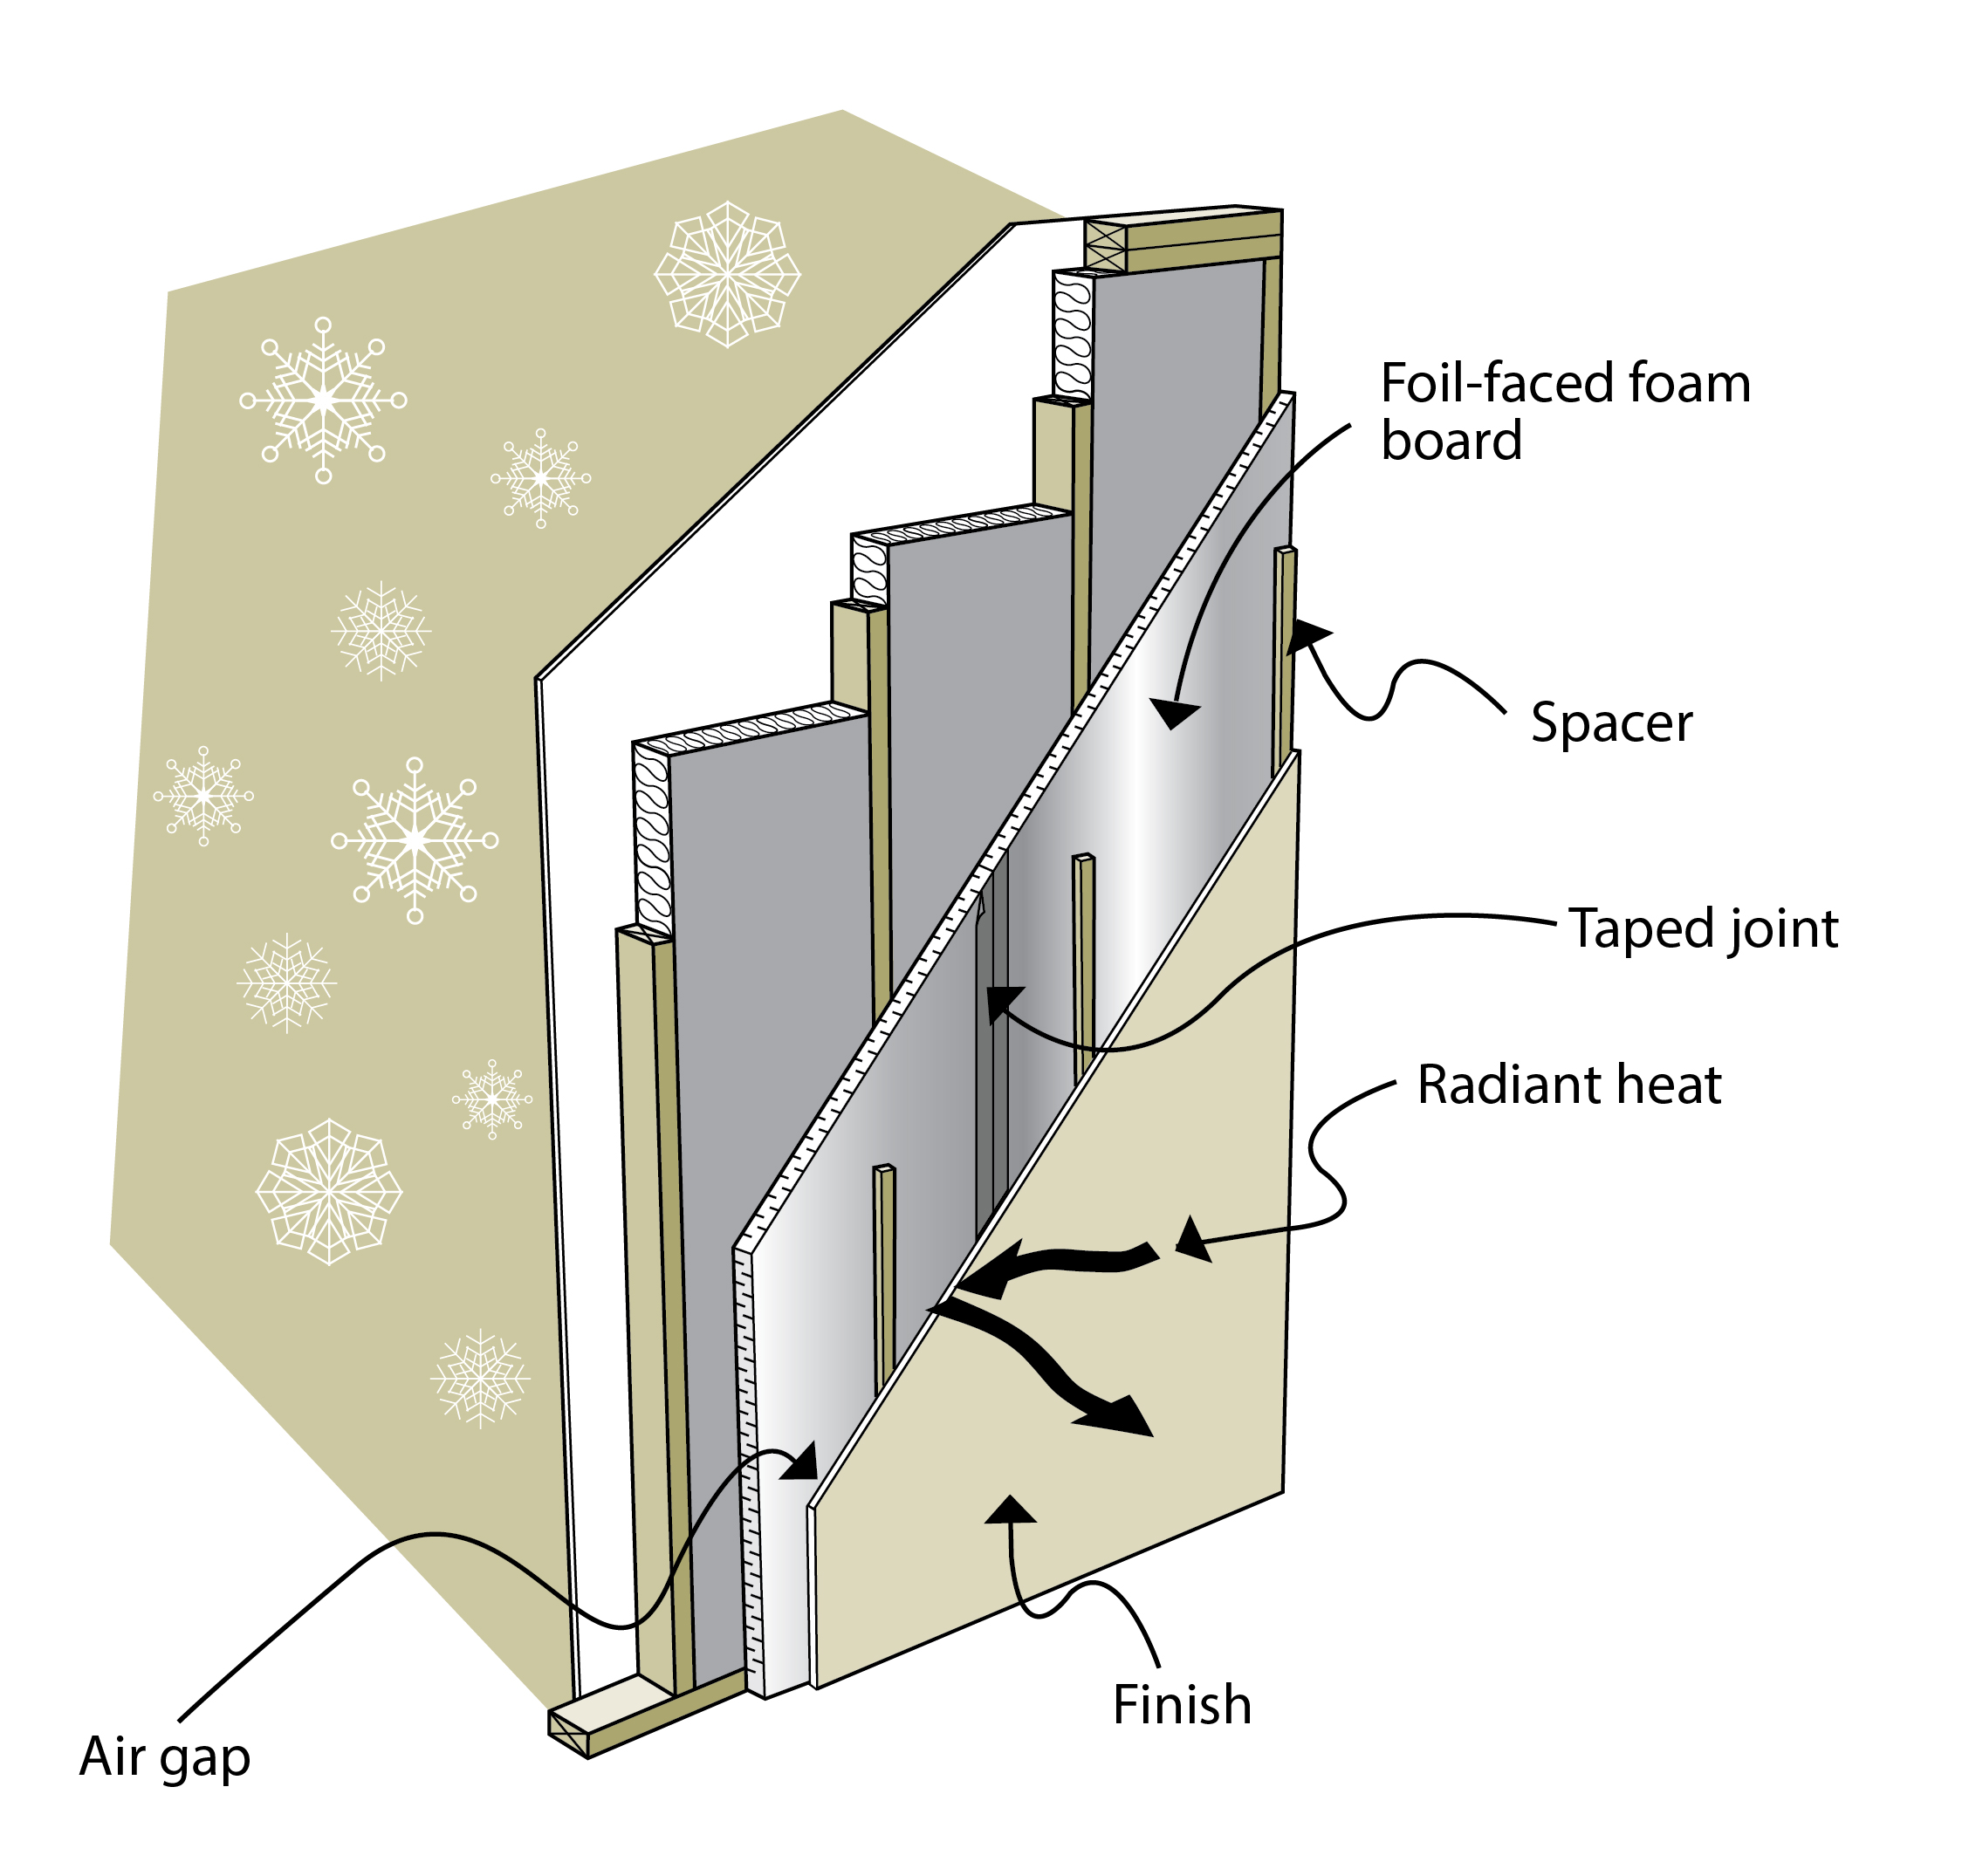 Foil-faced foam board acts as an air vapour barrier